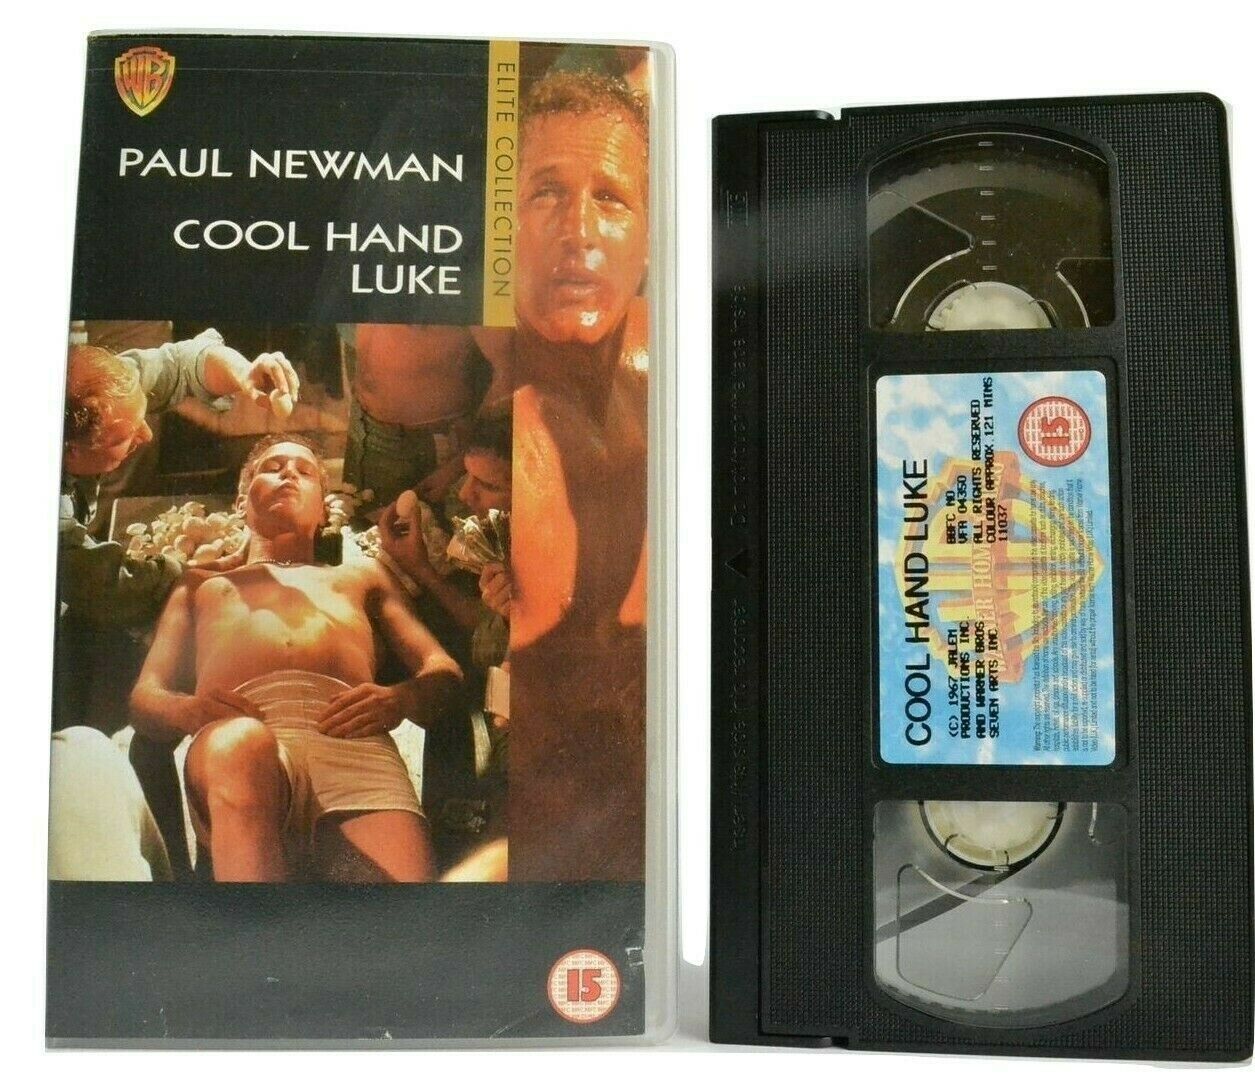 Cool Hand Luke (1967); [Elite Collection] - Crime Drama - Paul Newman - Pal VHS-